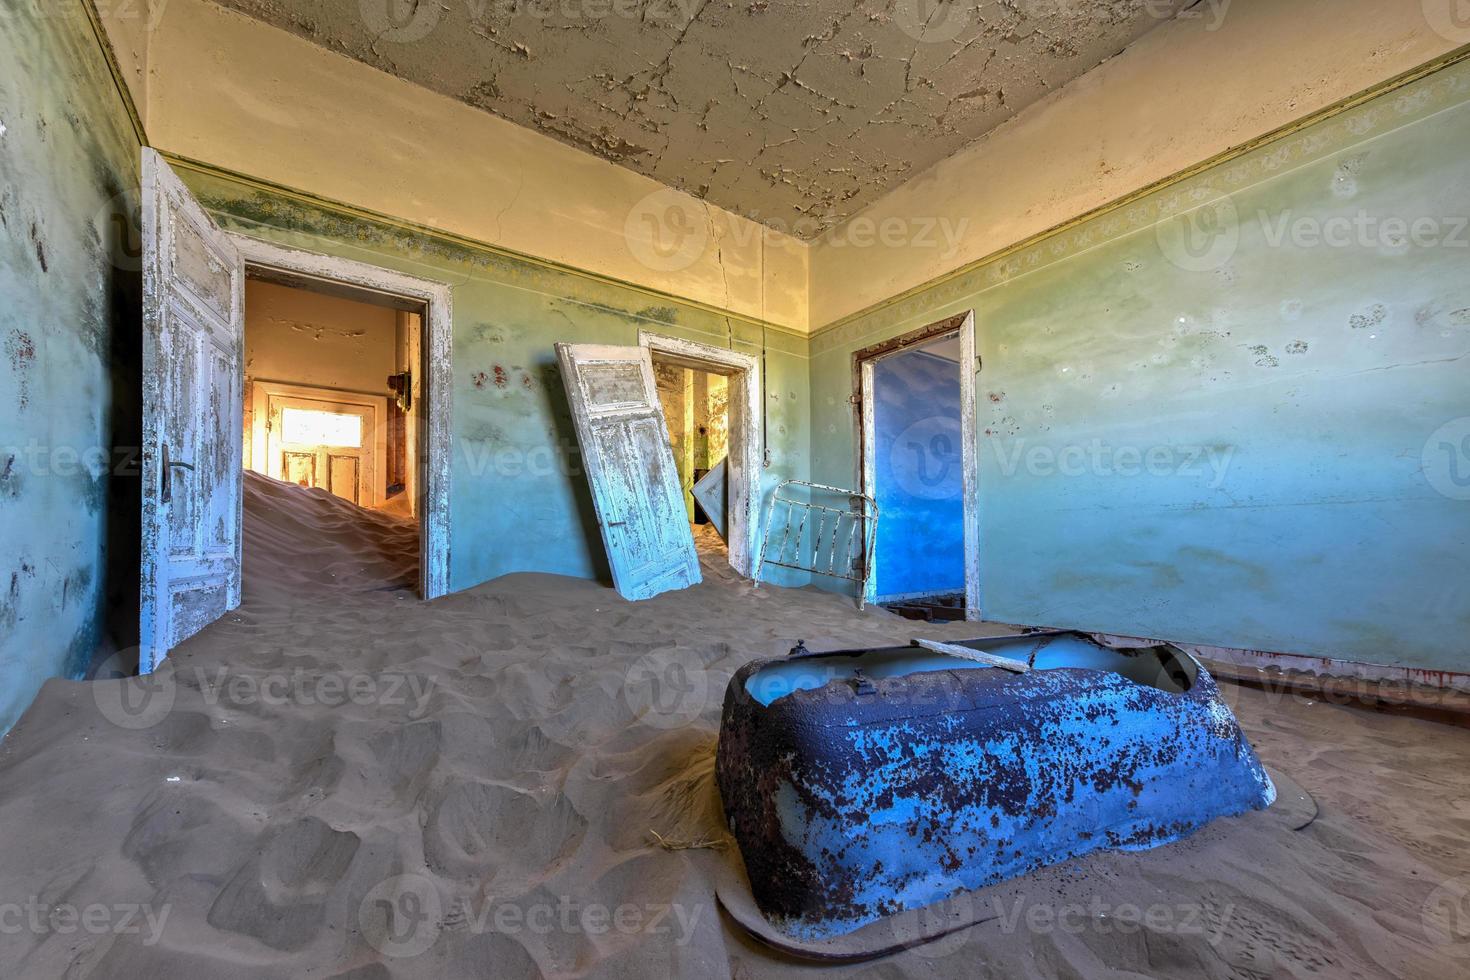 cidade fantasma kolmanskop, namíbia foto